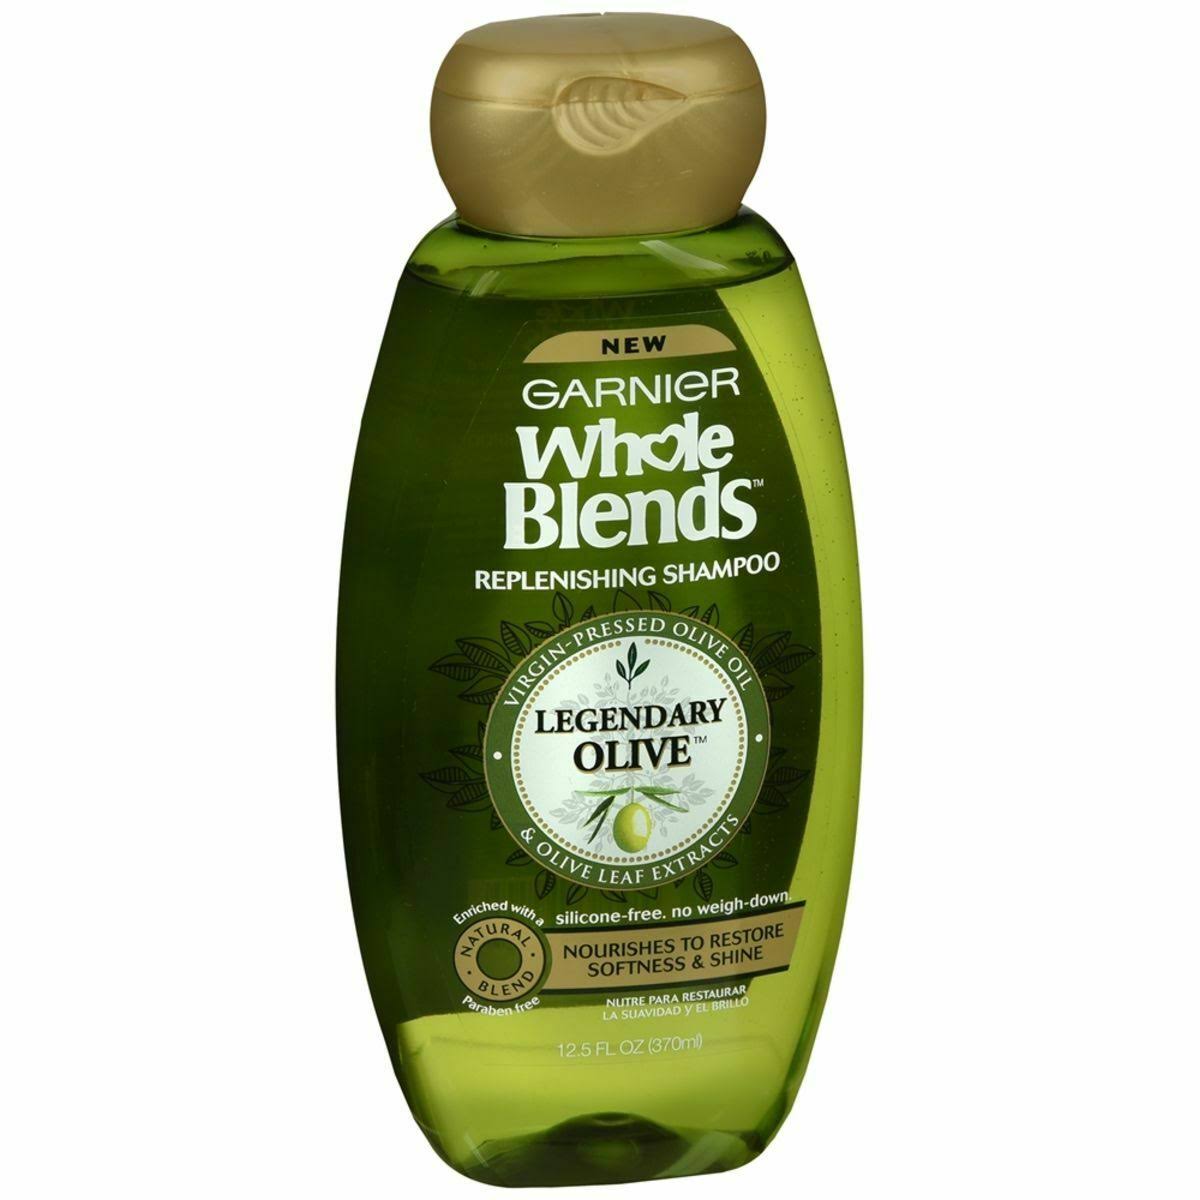 Garnier Whole Blends Replenishing Shampoo - 12.5oz, Legendary Olive